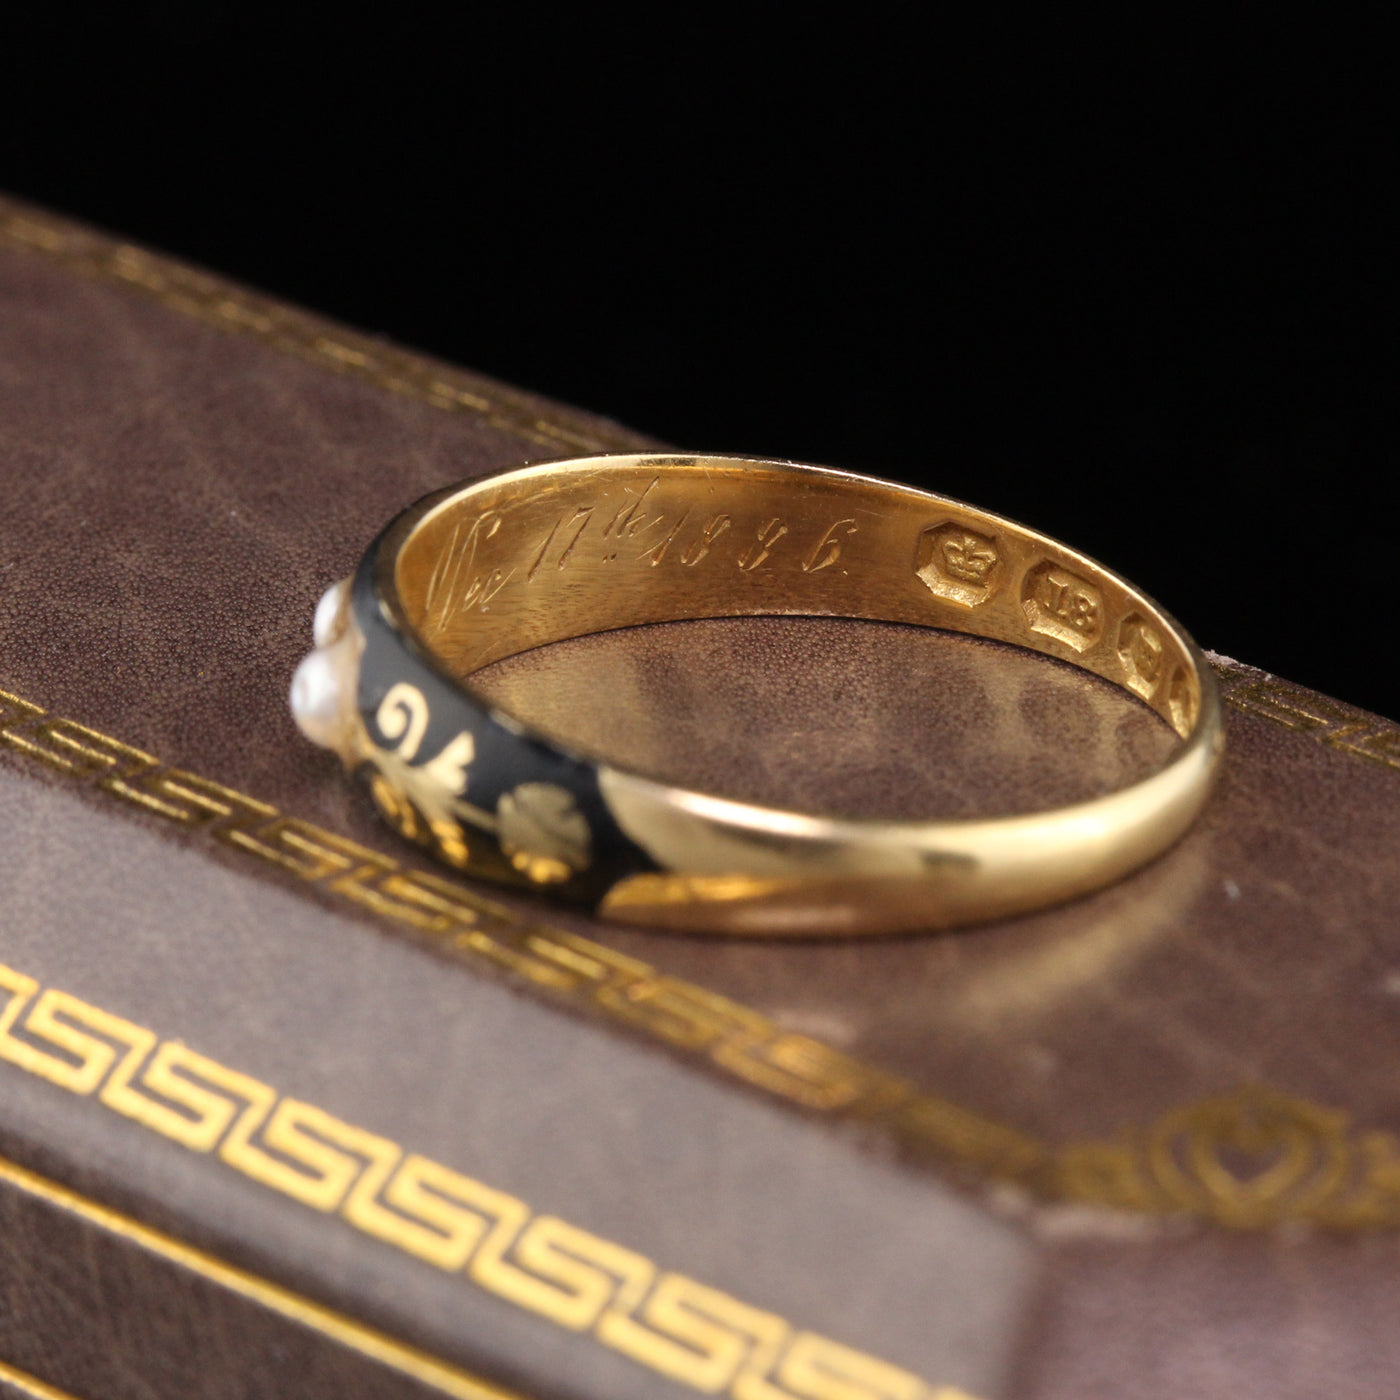 Circa 1836 - Antique Georgian 18K Yellow Gold Black Enamel & Pearl Mourning Band Ring - The Antique Parlour